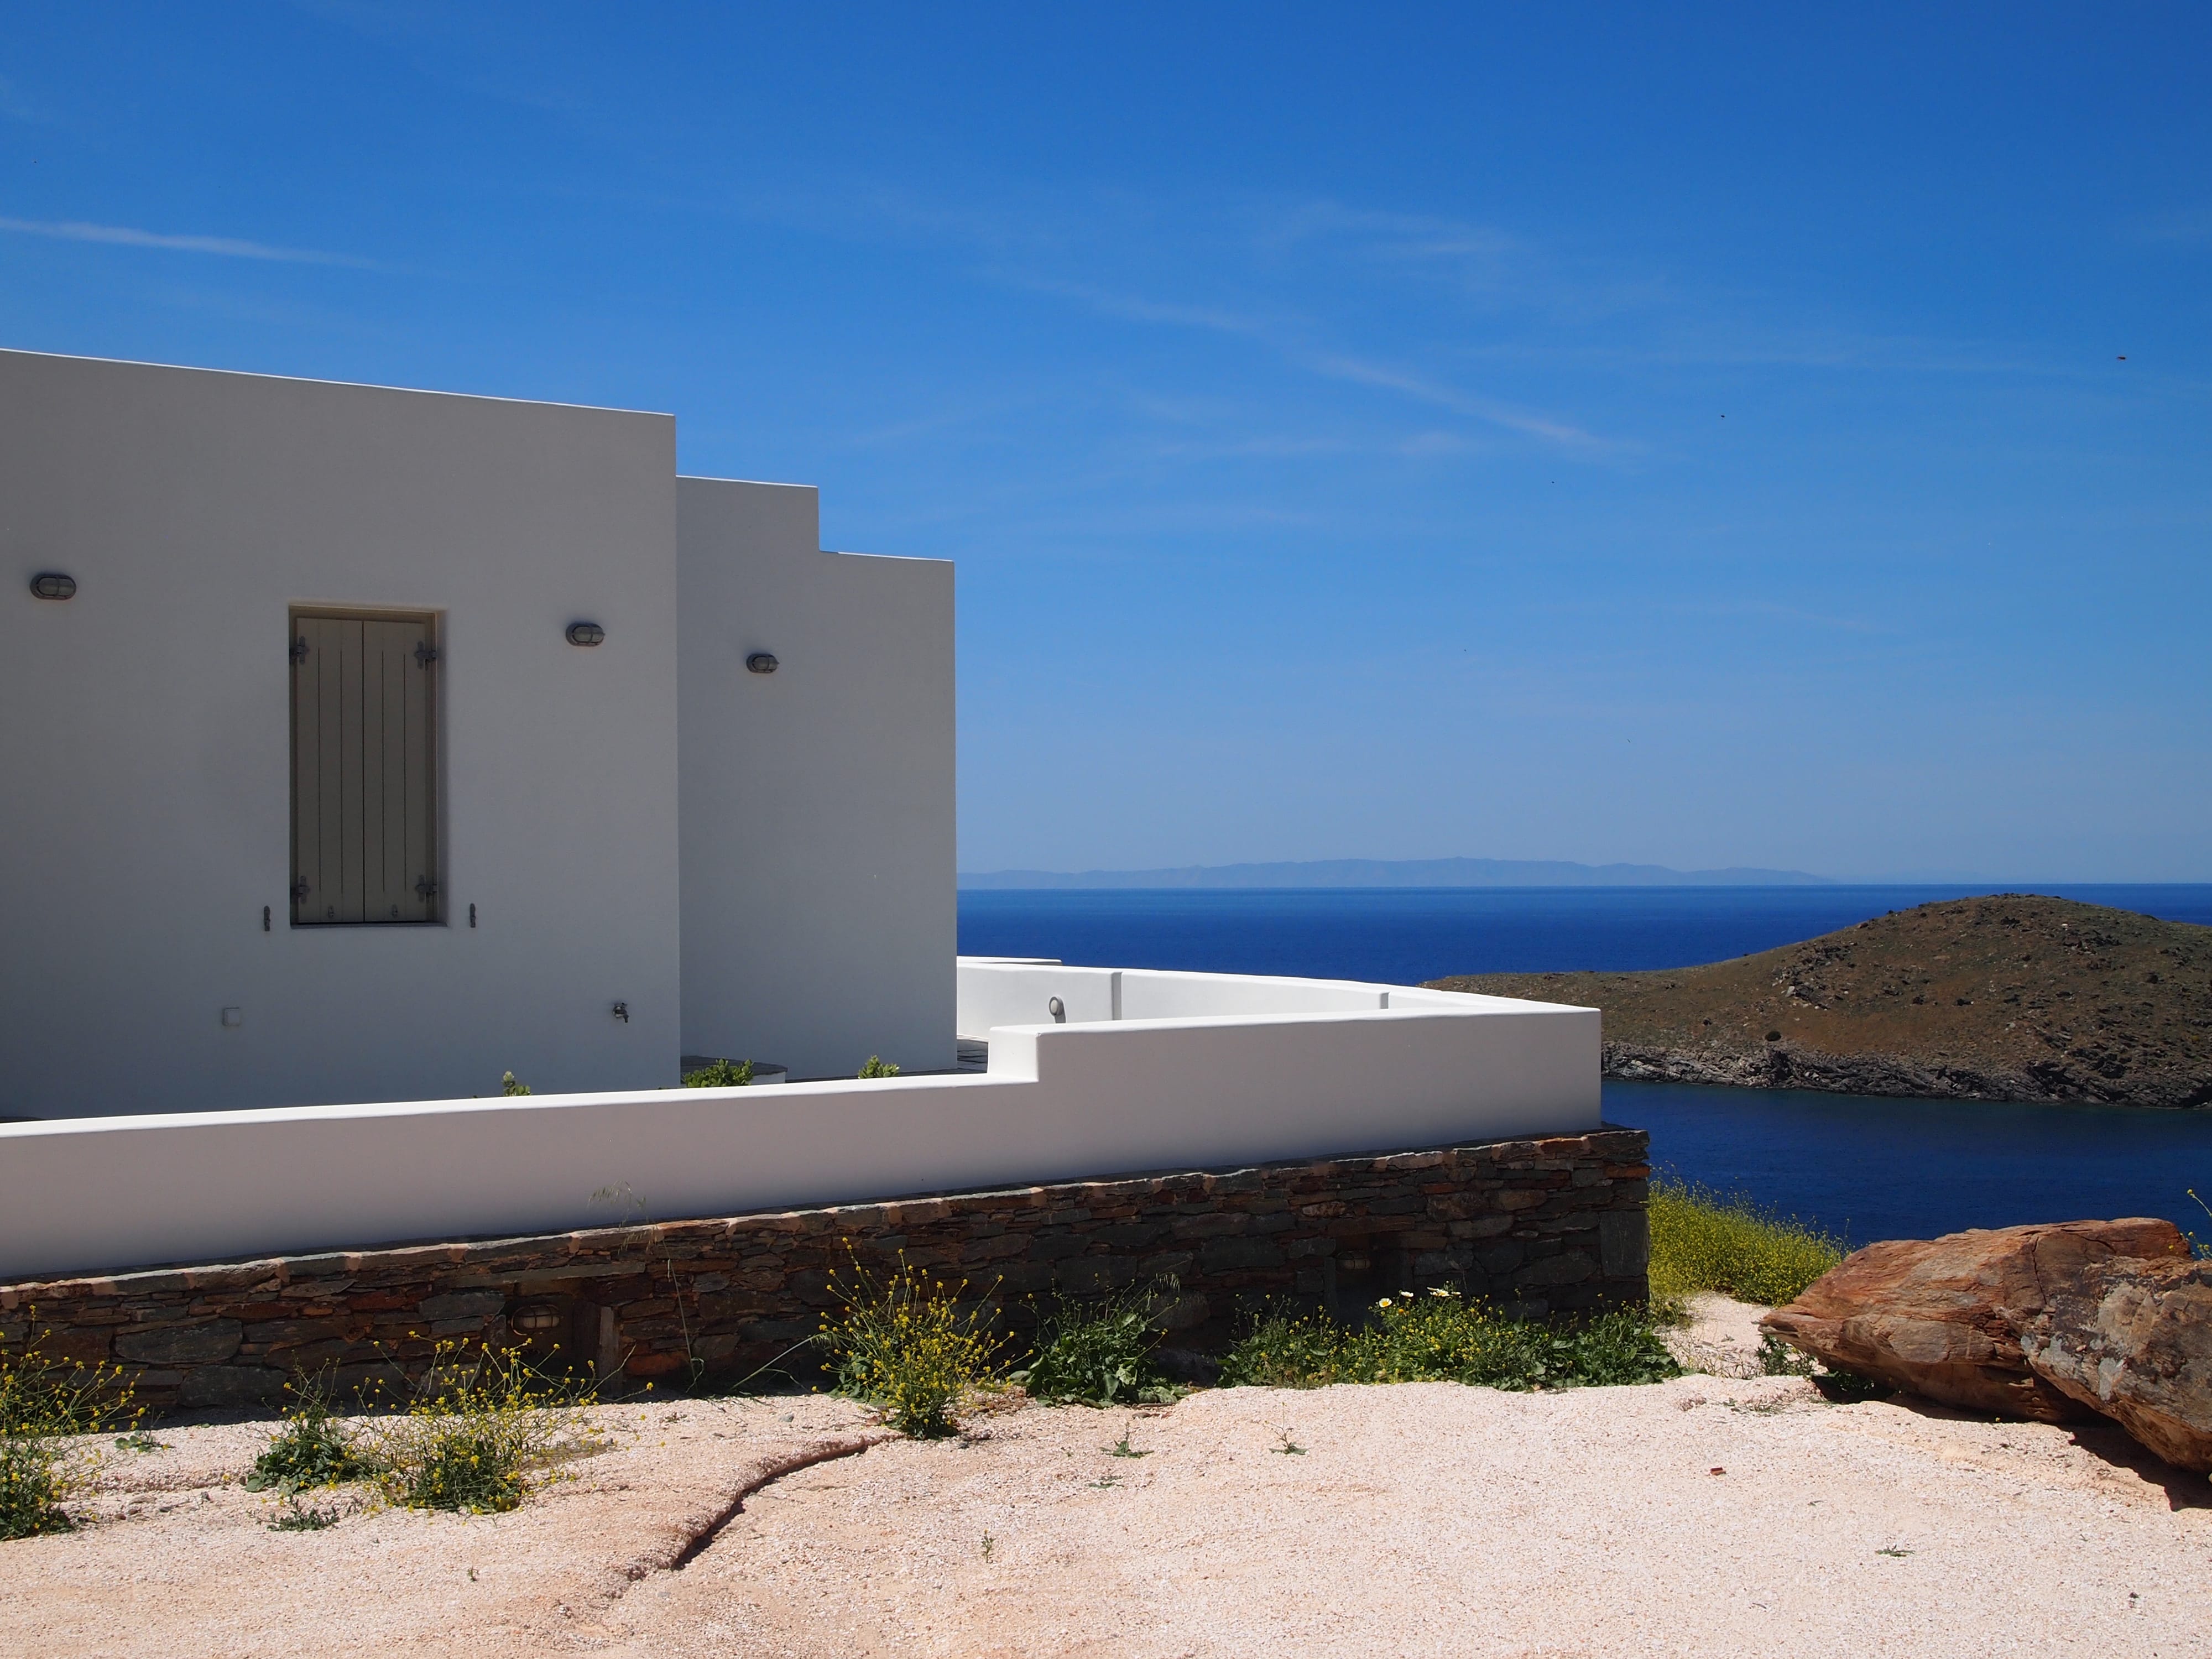 Evripiotis Architects--Delphini, Syros Island